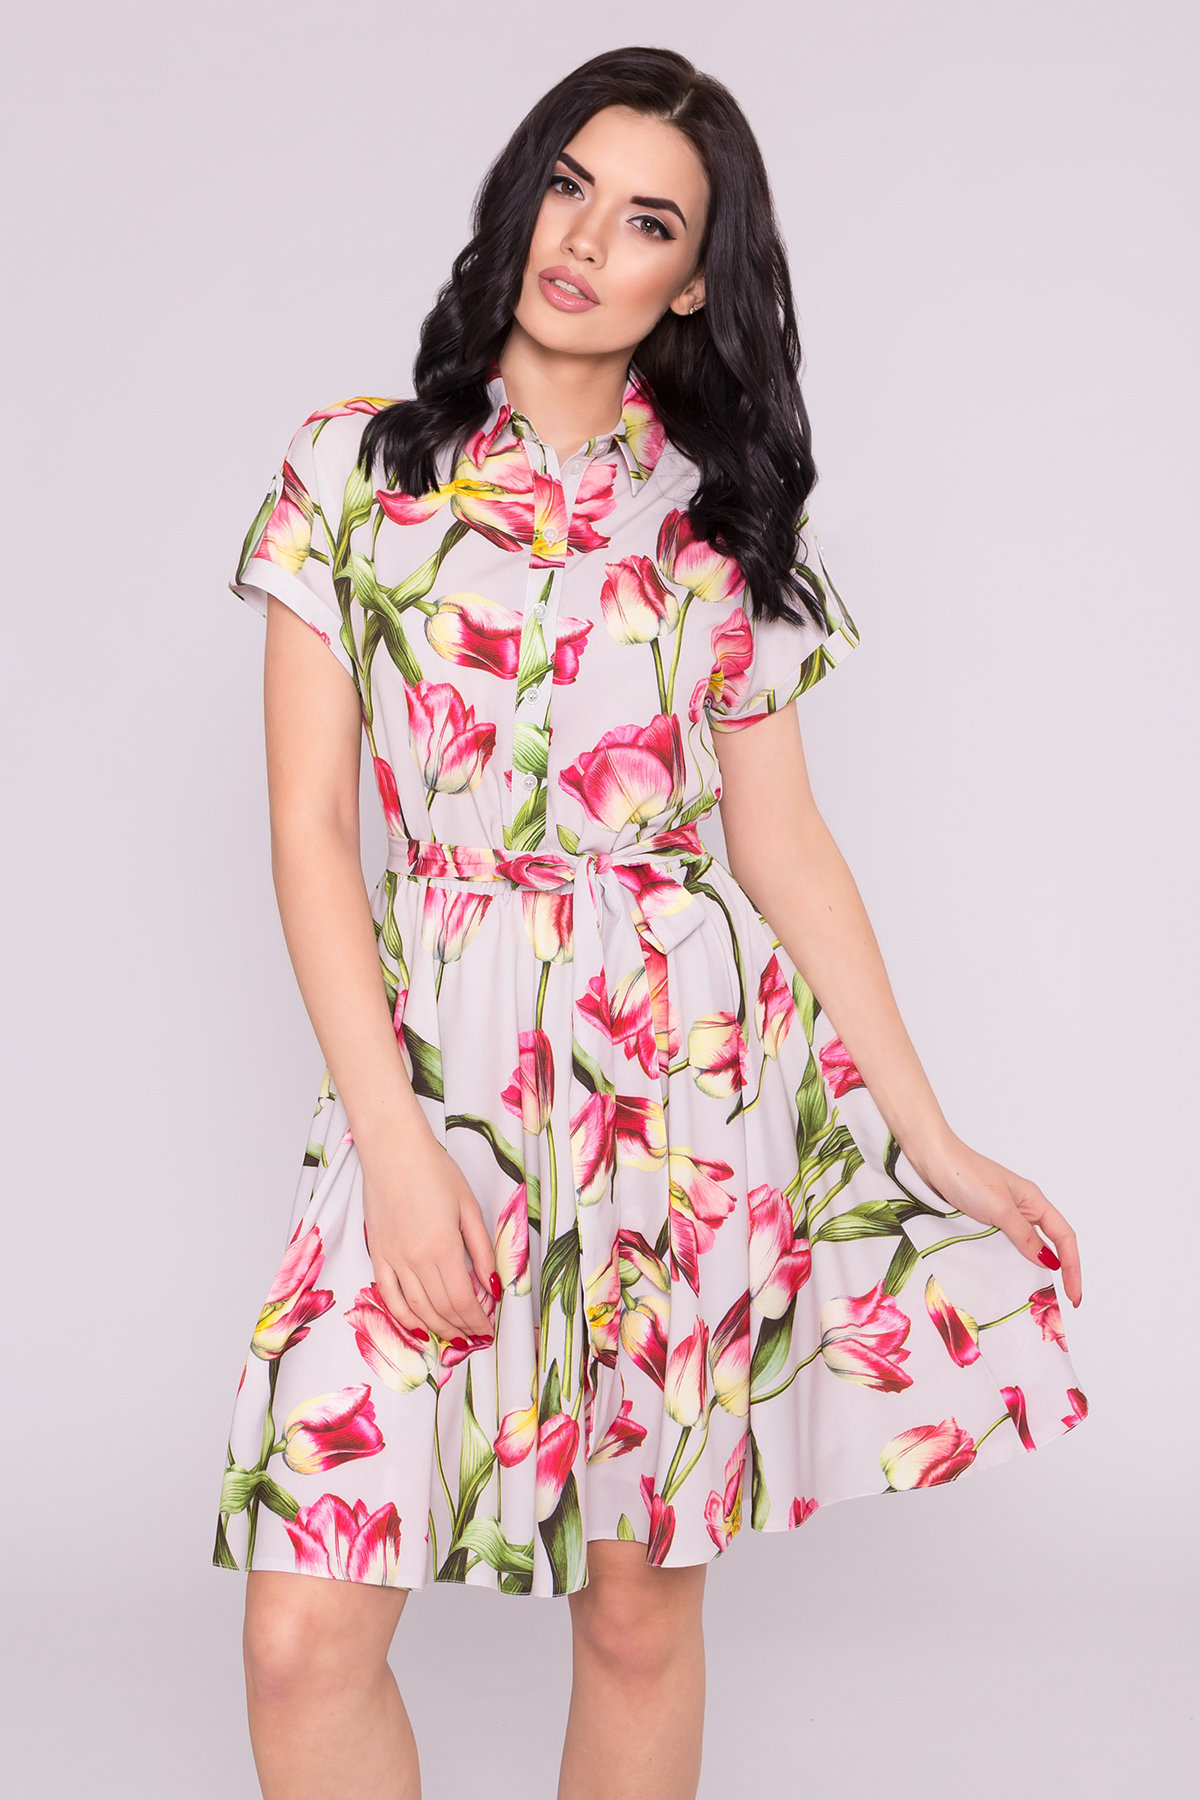 Платье Санжар 7061 Цвет: Тюльпан серый/розовый